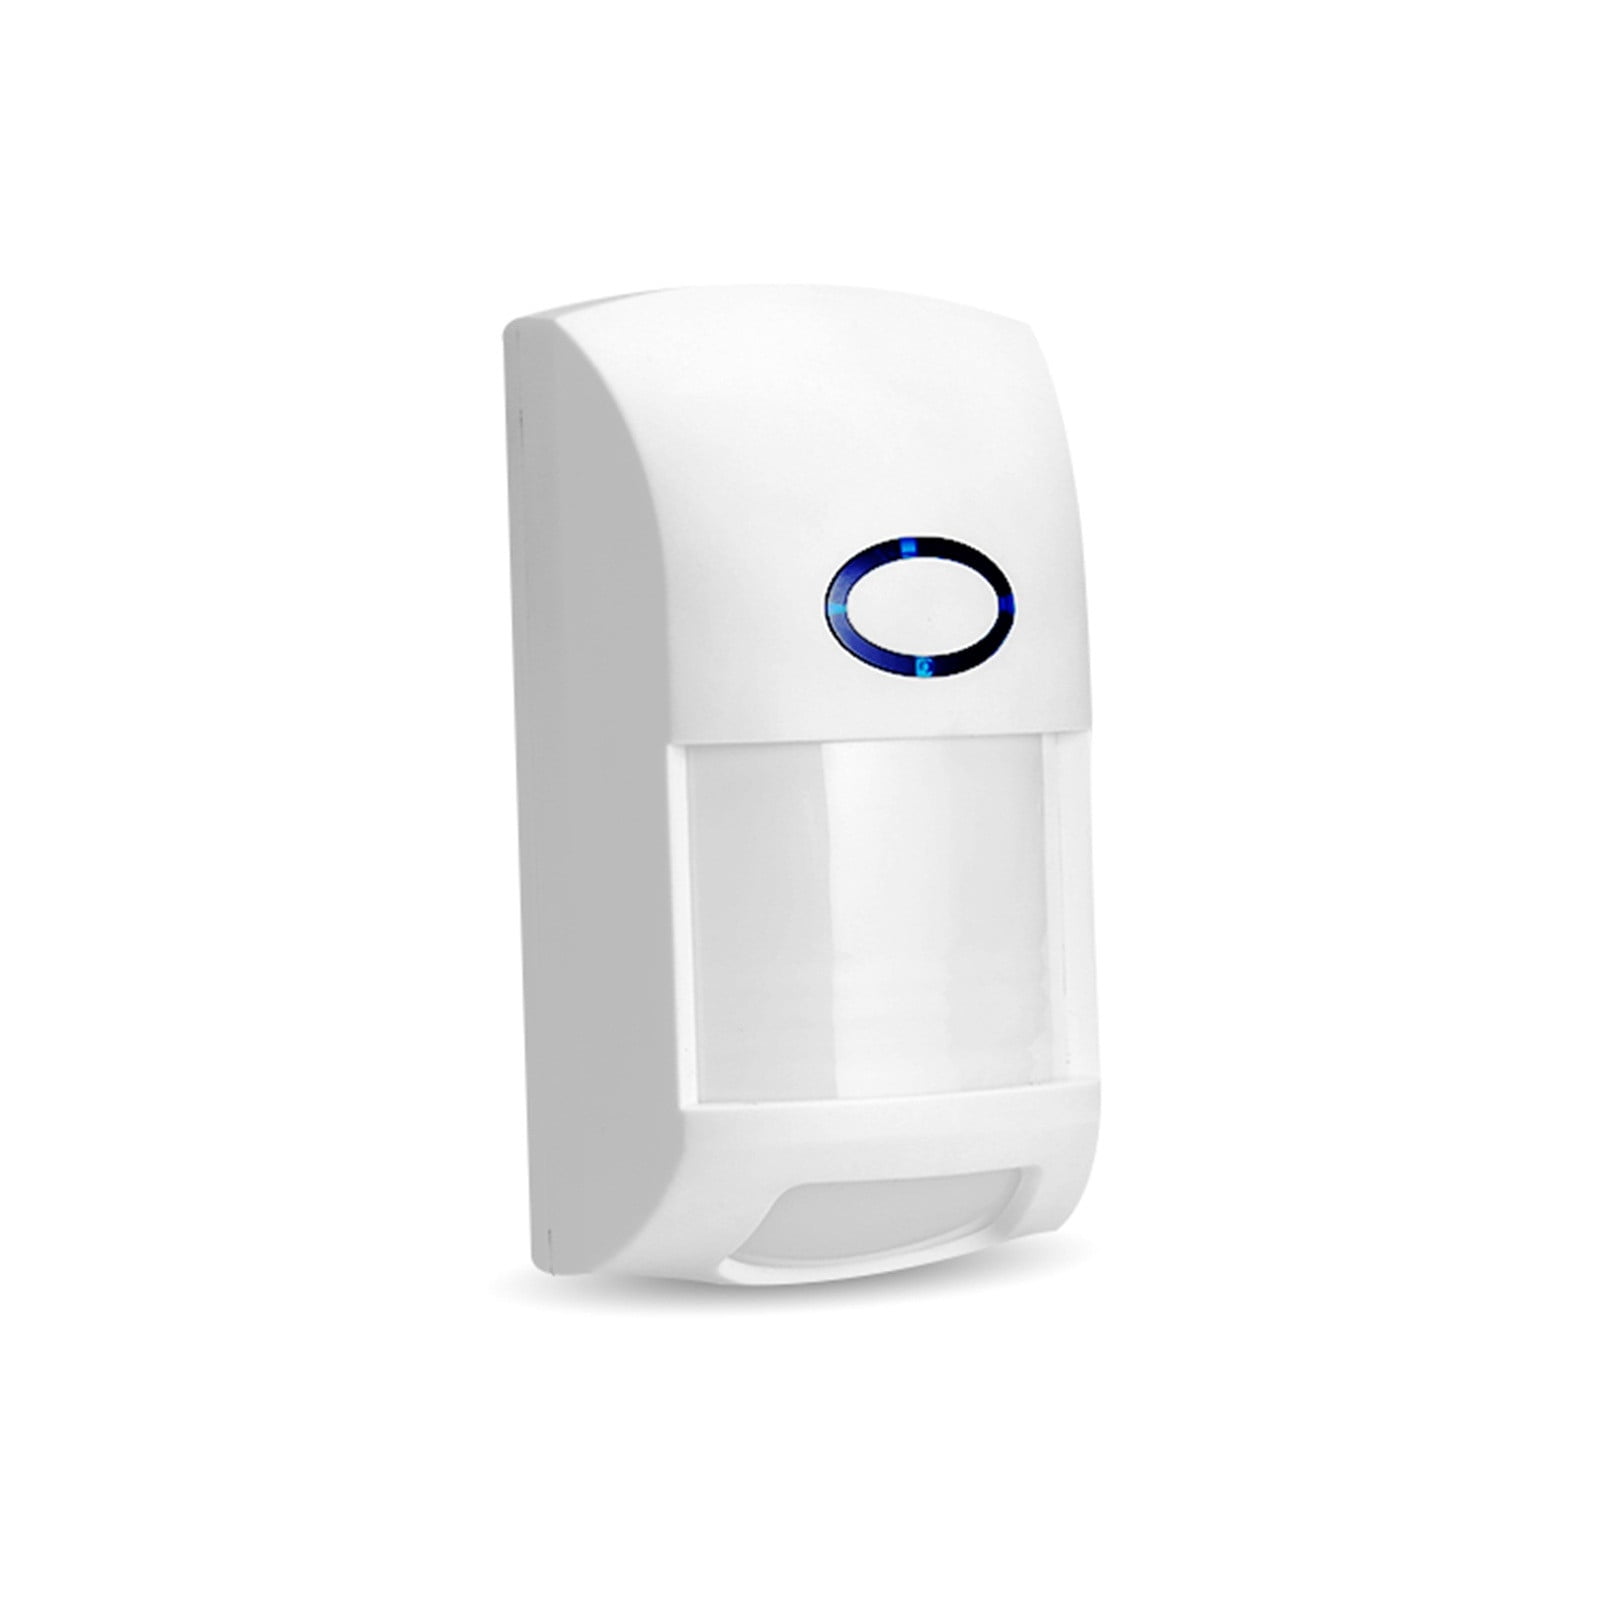 Outdoor Motion Sensor Security Alarm System PIR Infrared Detector 433MHZ V2W4 